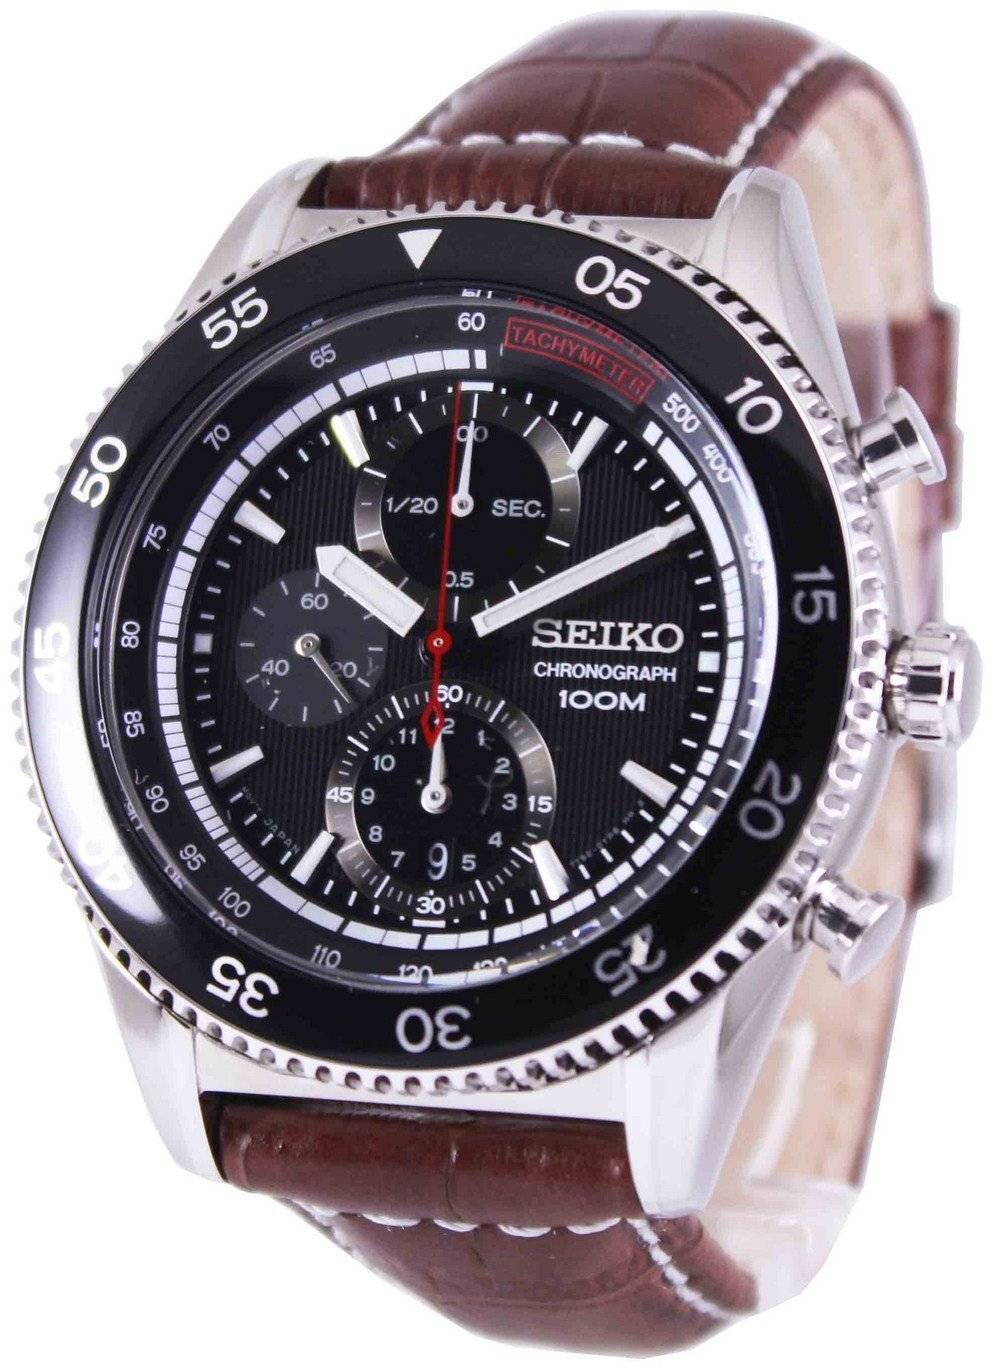 Đồng hồ đeo tay nam Seiko Chronograph Tachymeter 100M SNDG57P2 vi